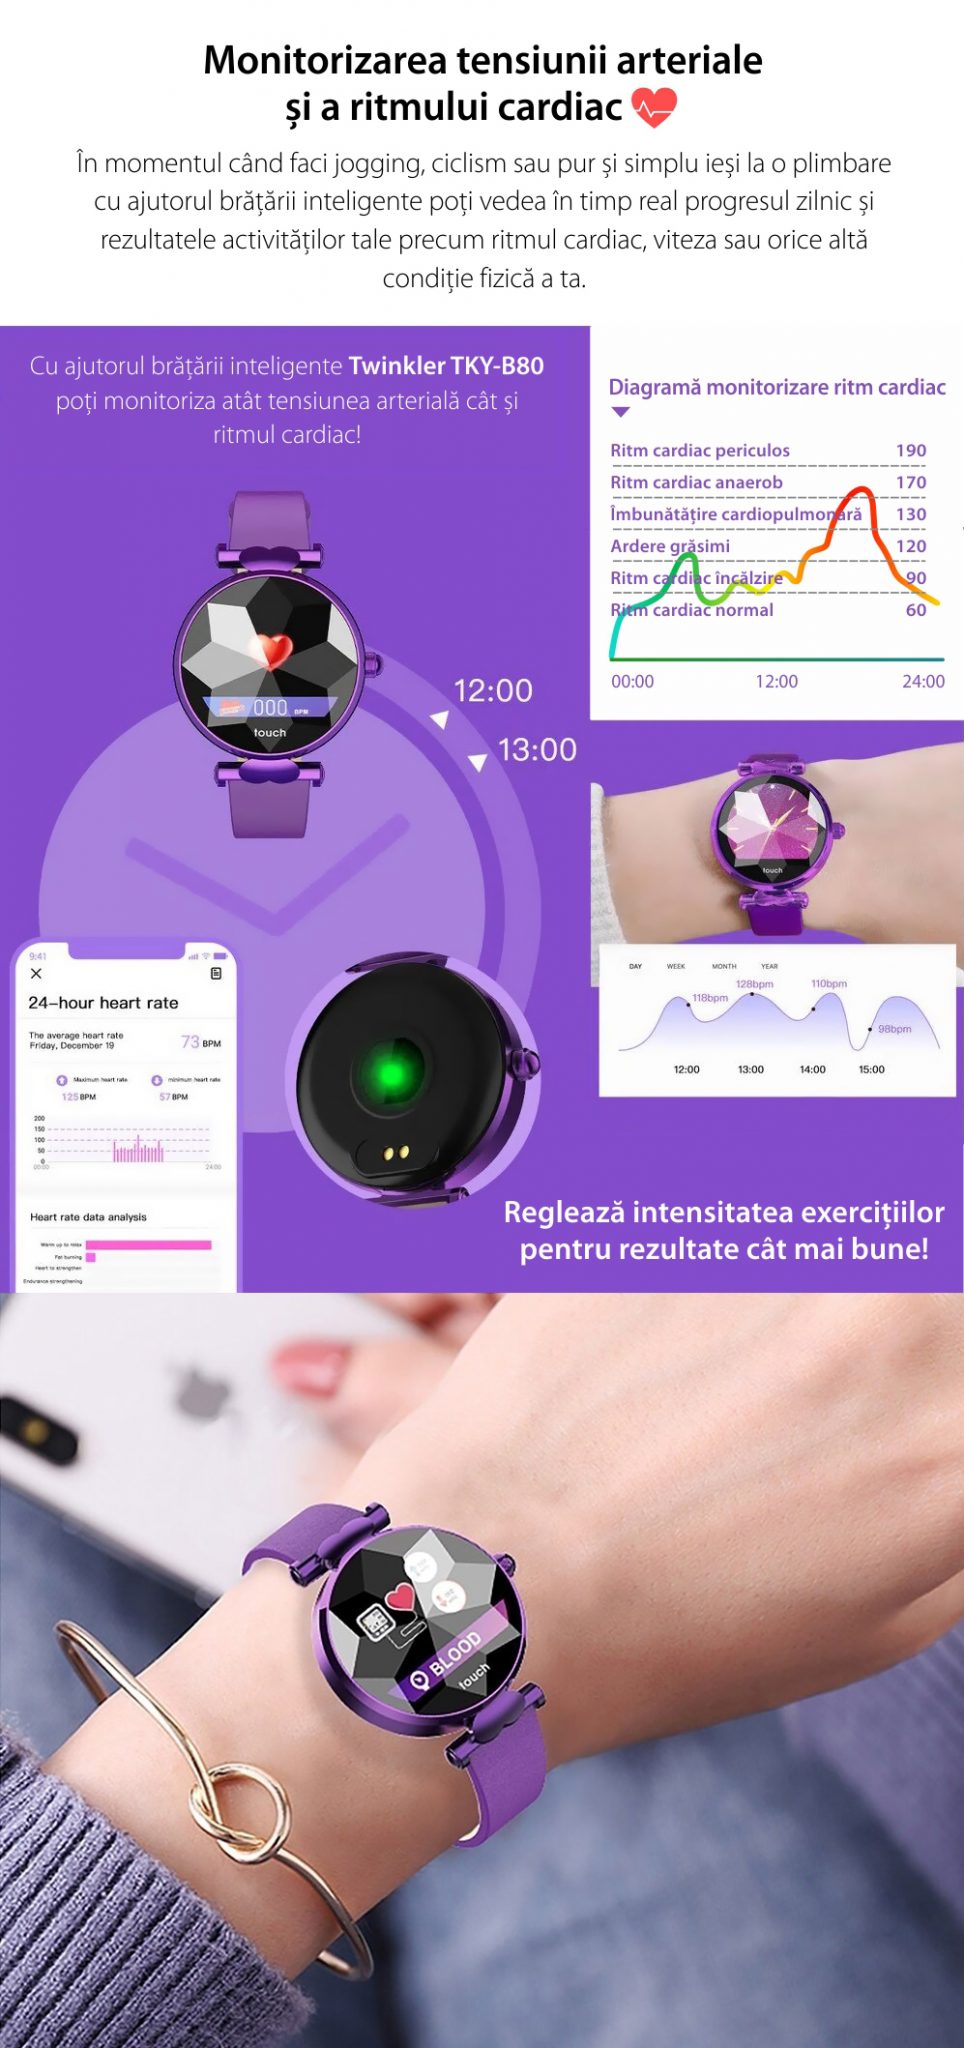 Ceas Smartwatch fitness fashion TKY-B80 Piele cu functie de monitorizare ritm cardiac, Tensiune arteriala, Monitorizare somn, Notificari Apel/ SMS, Auriu – Rosu